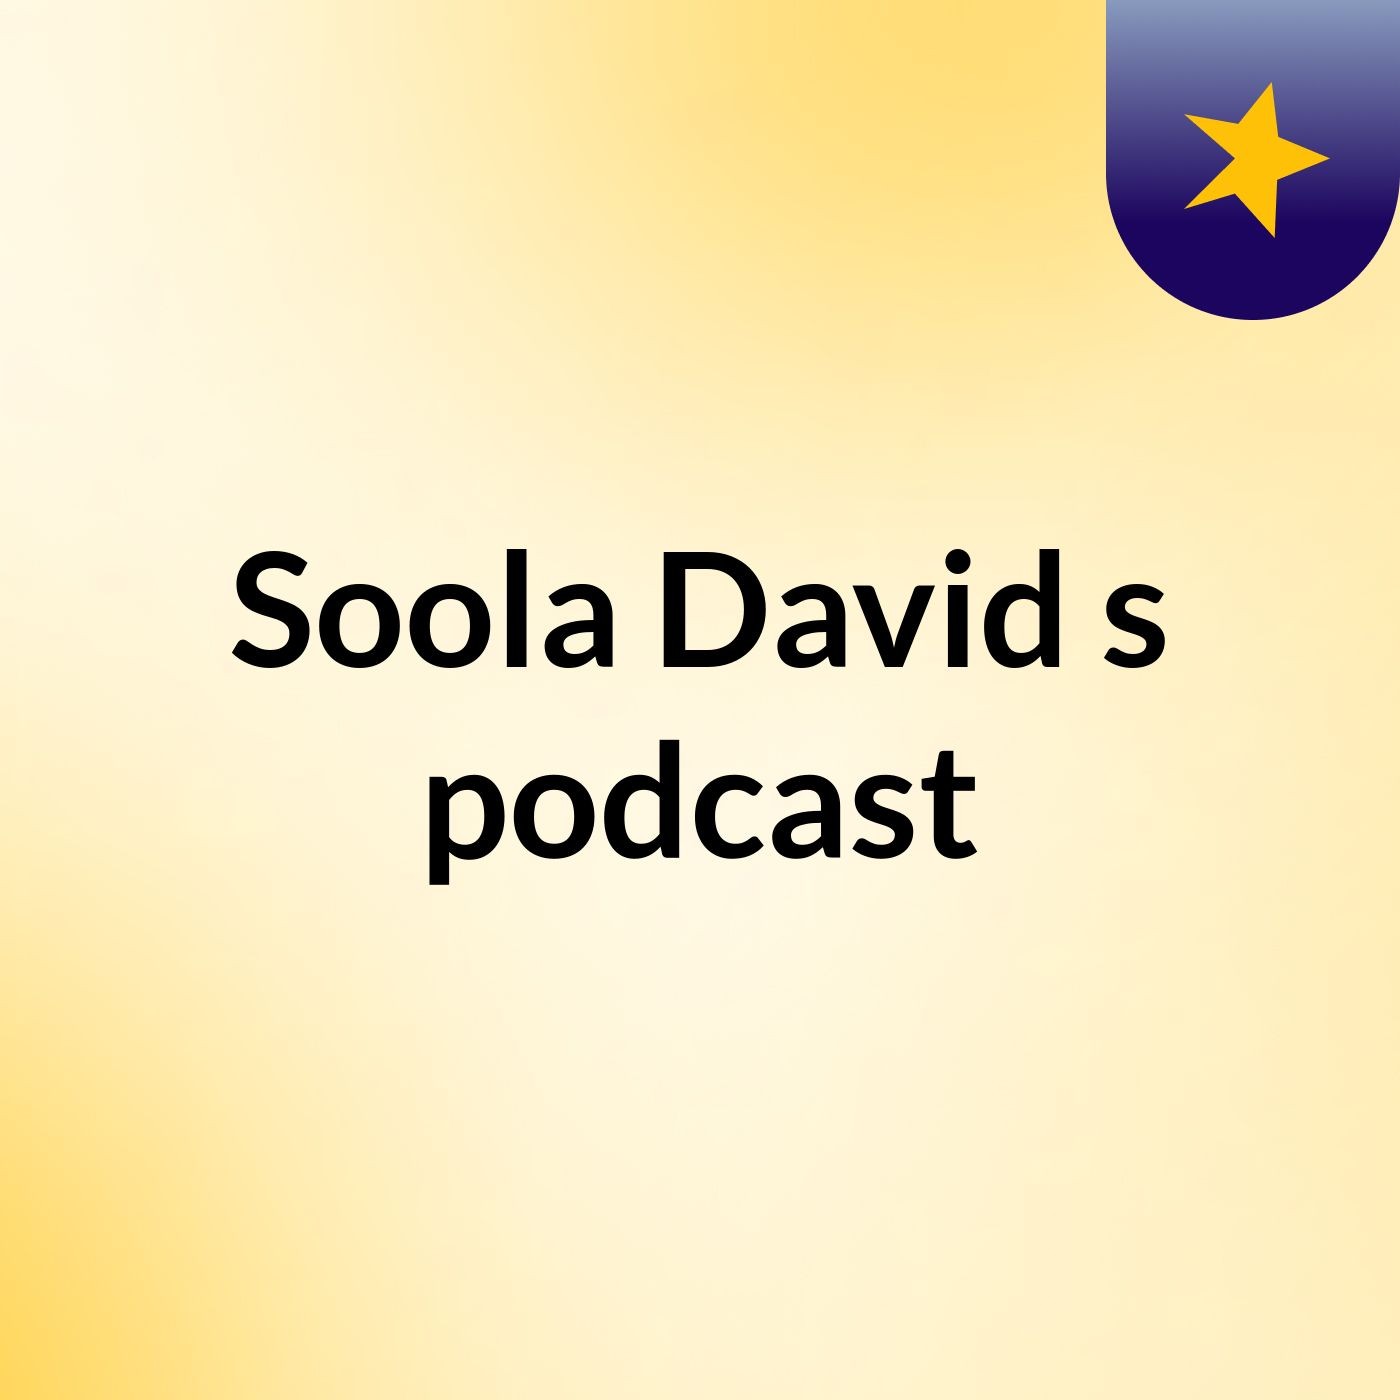 Soola David's podcast